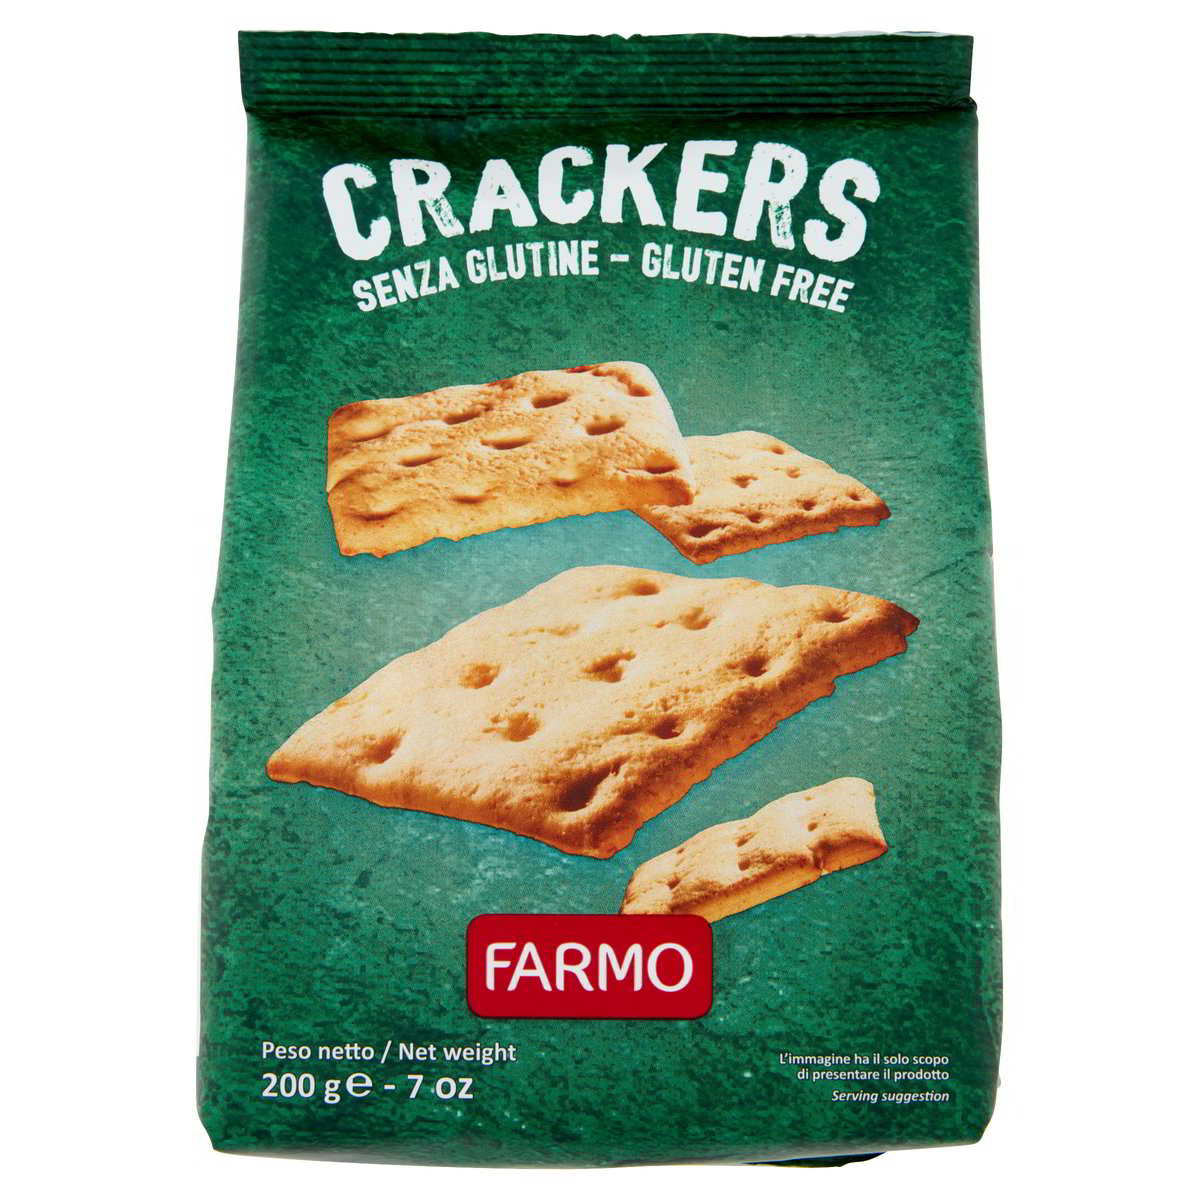 FARMO crackers gluten-free